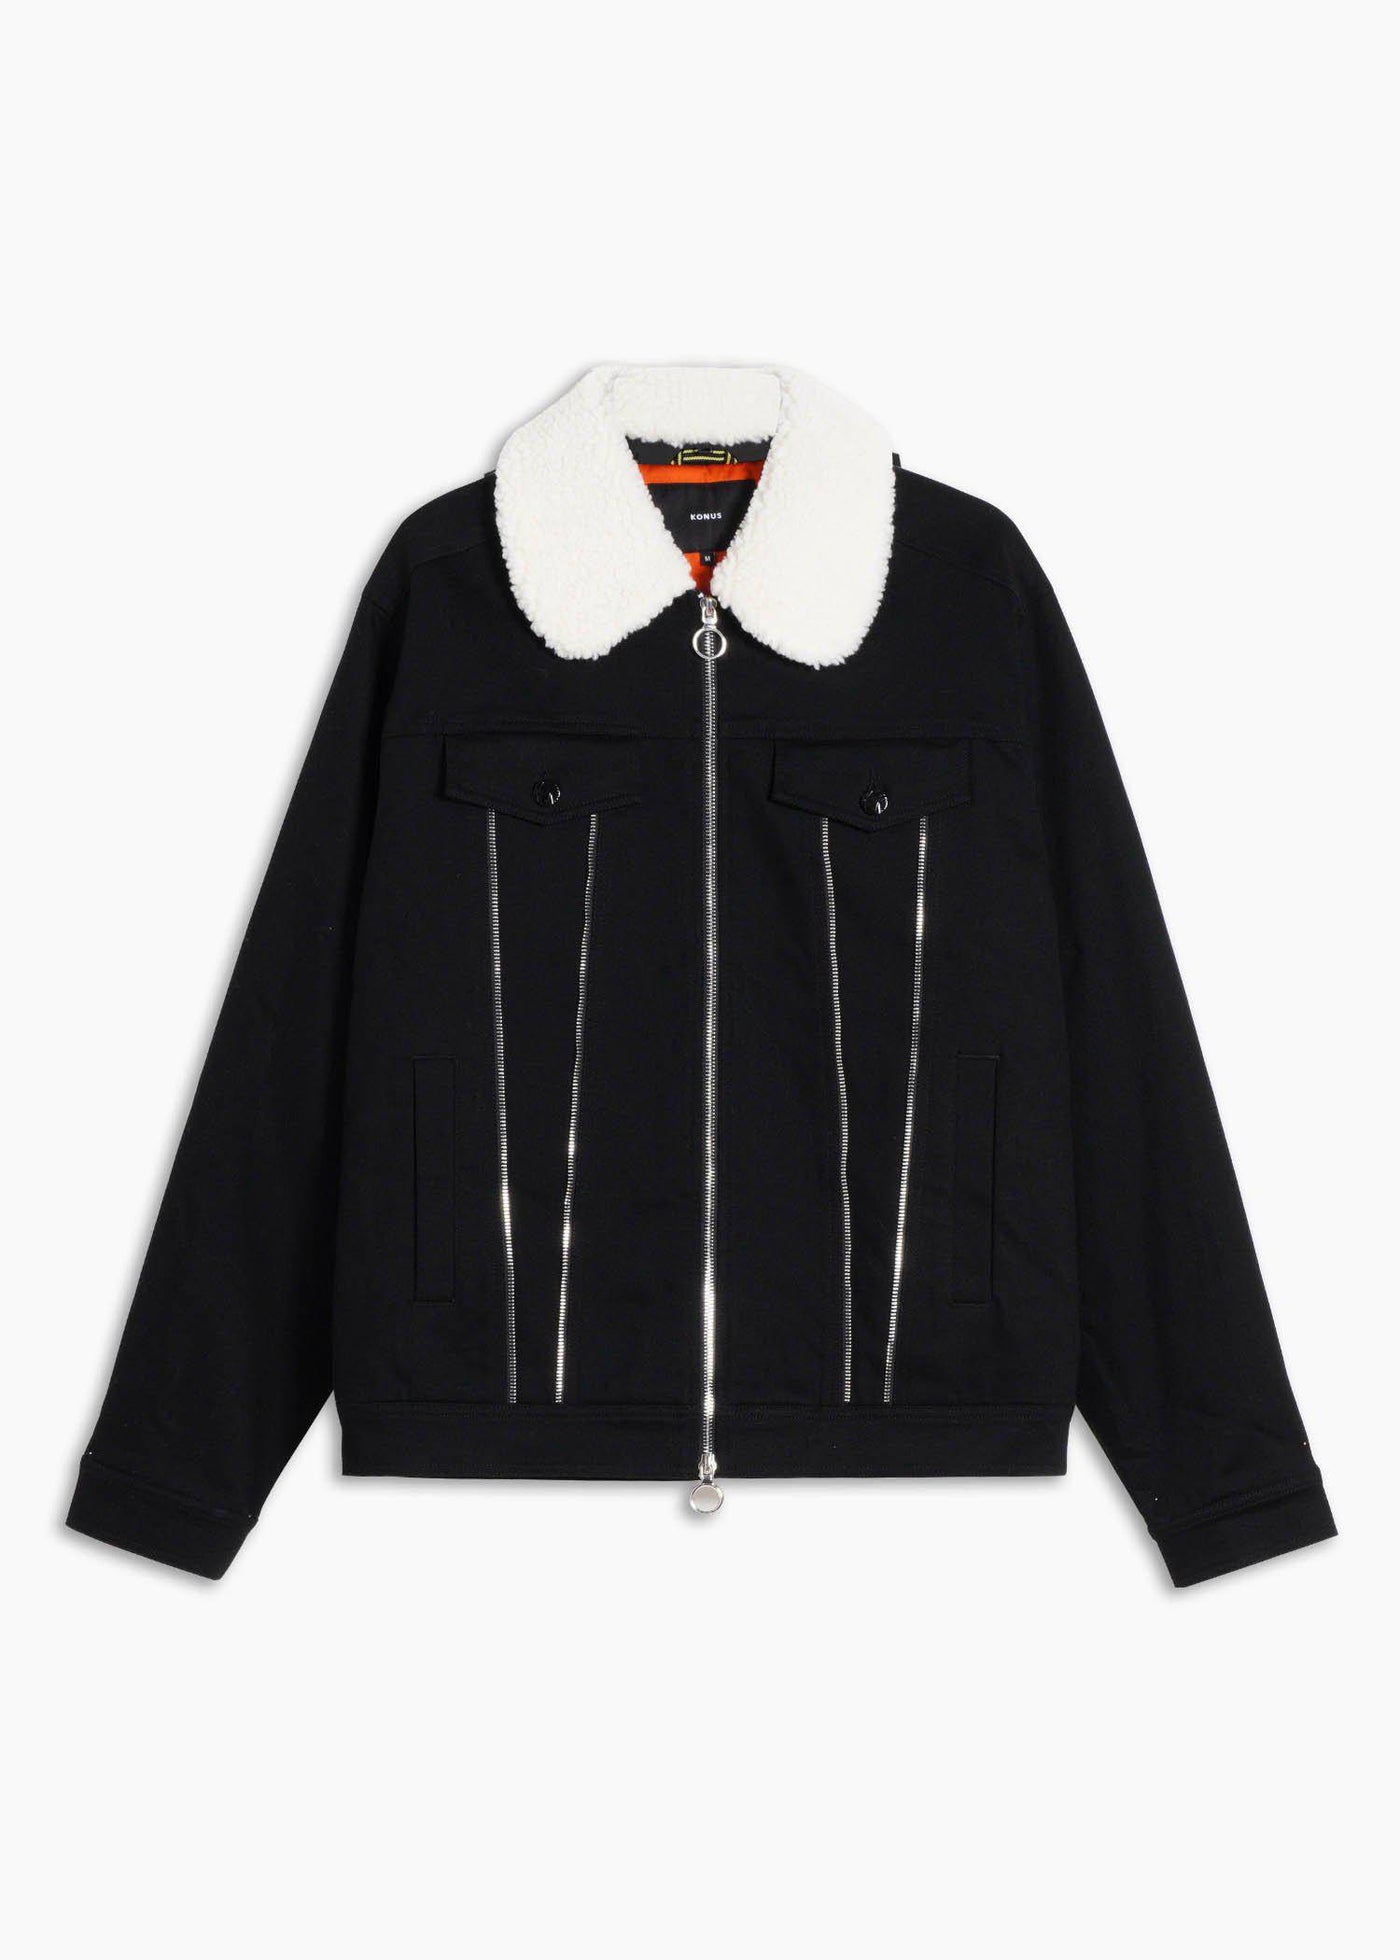 Konus Men's Twill Jacket with Sherpa Collar in Black by Shop at Konus